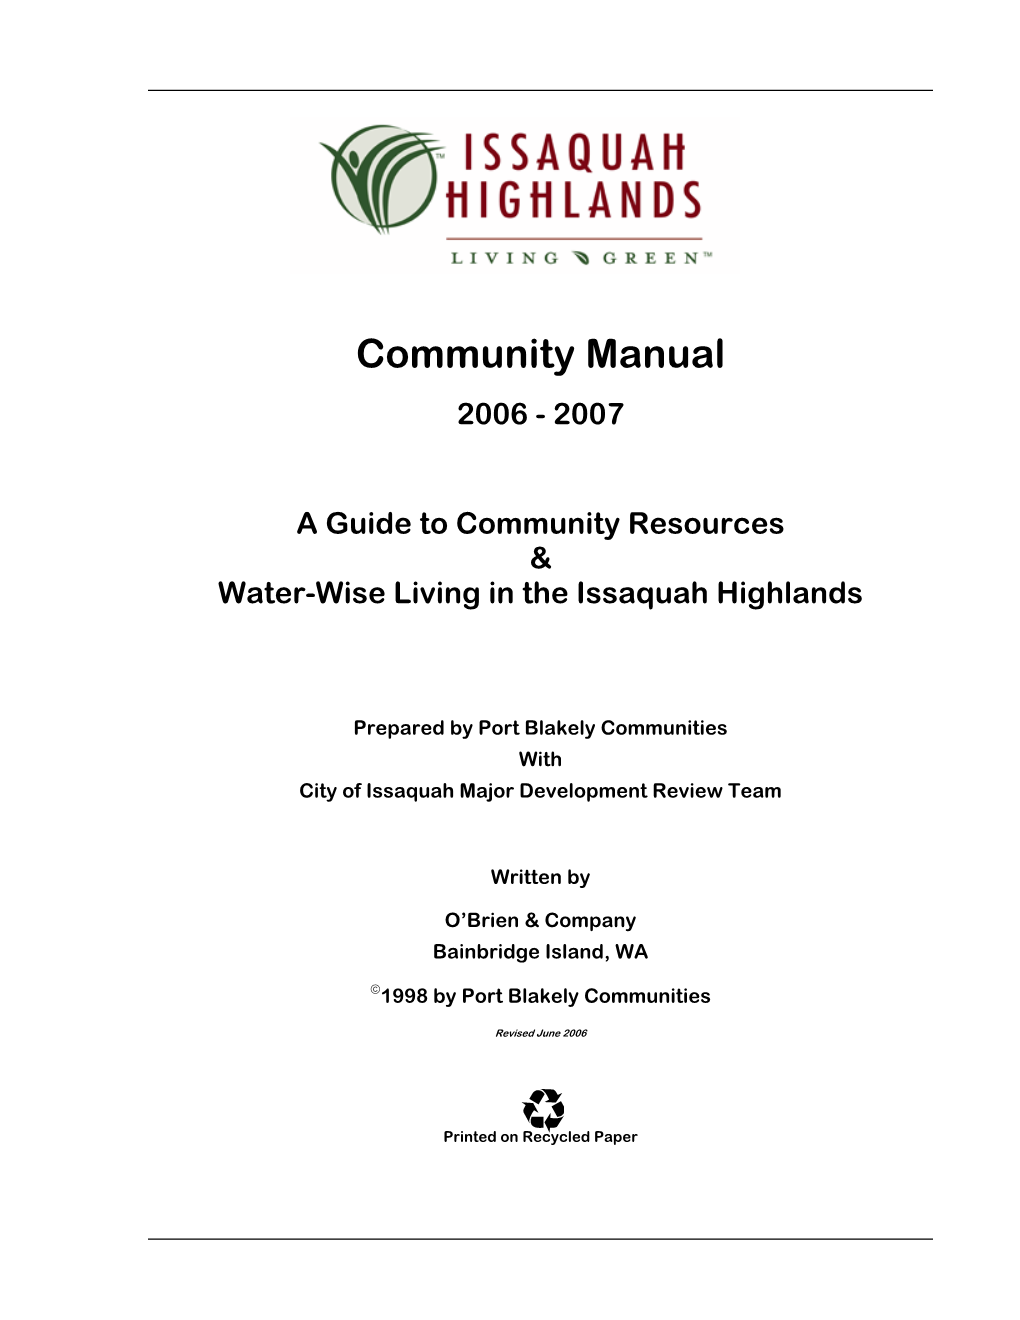 Community Manual 2006 - 2007